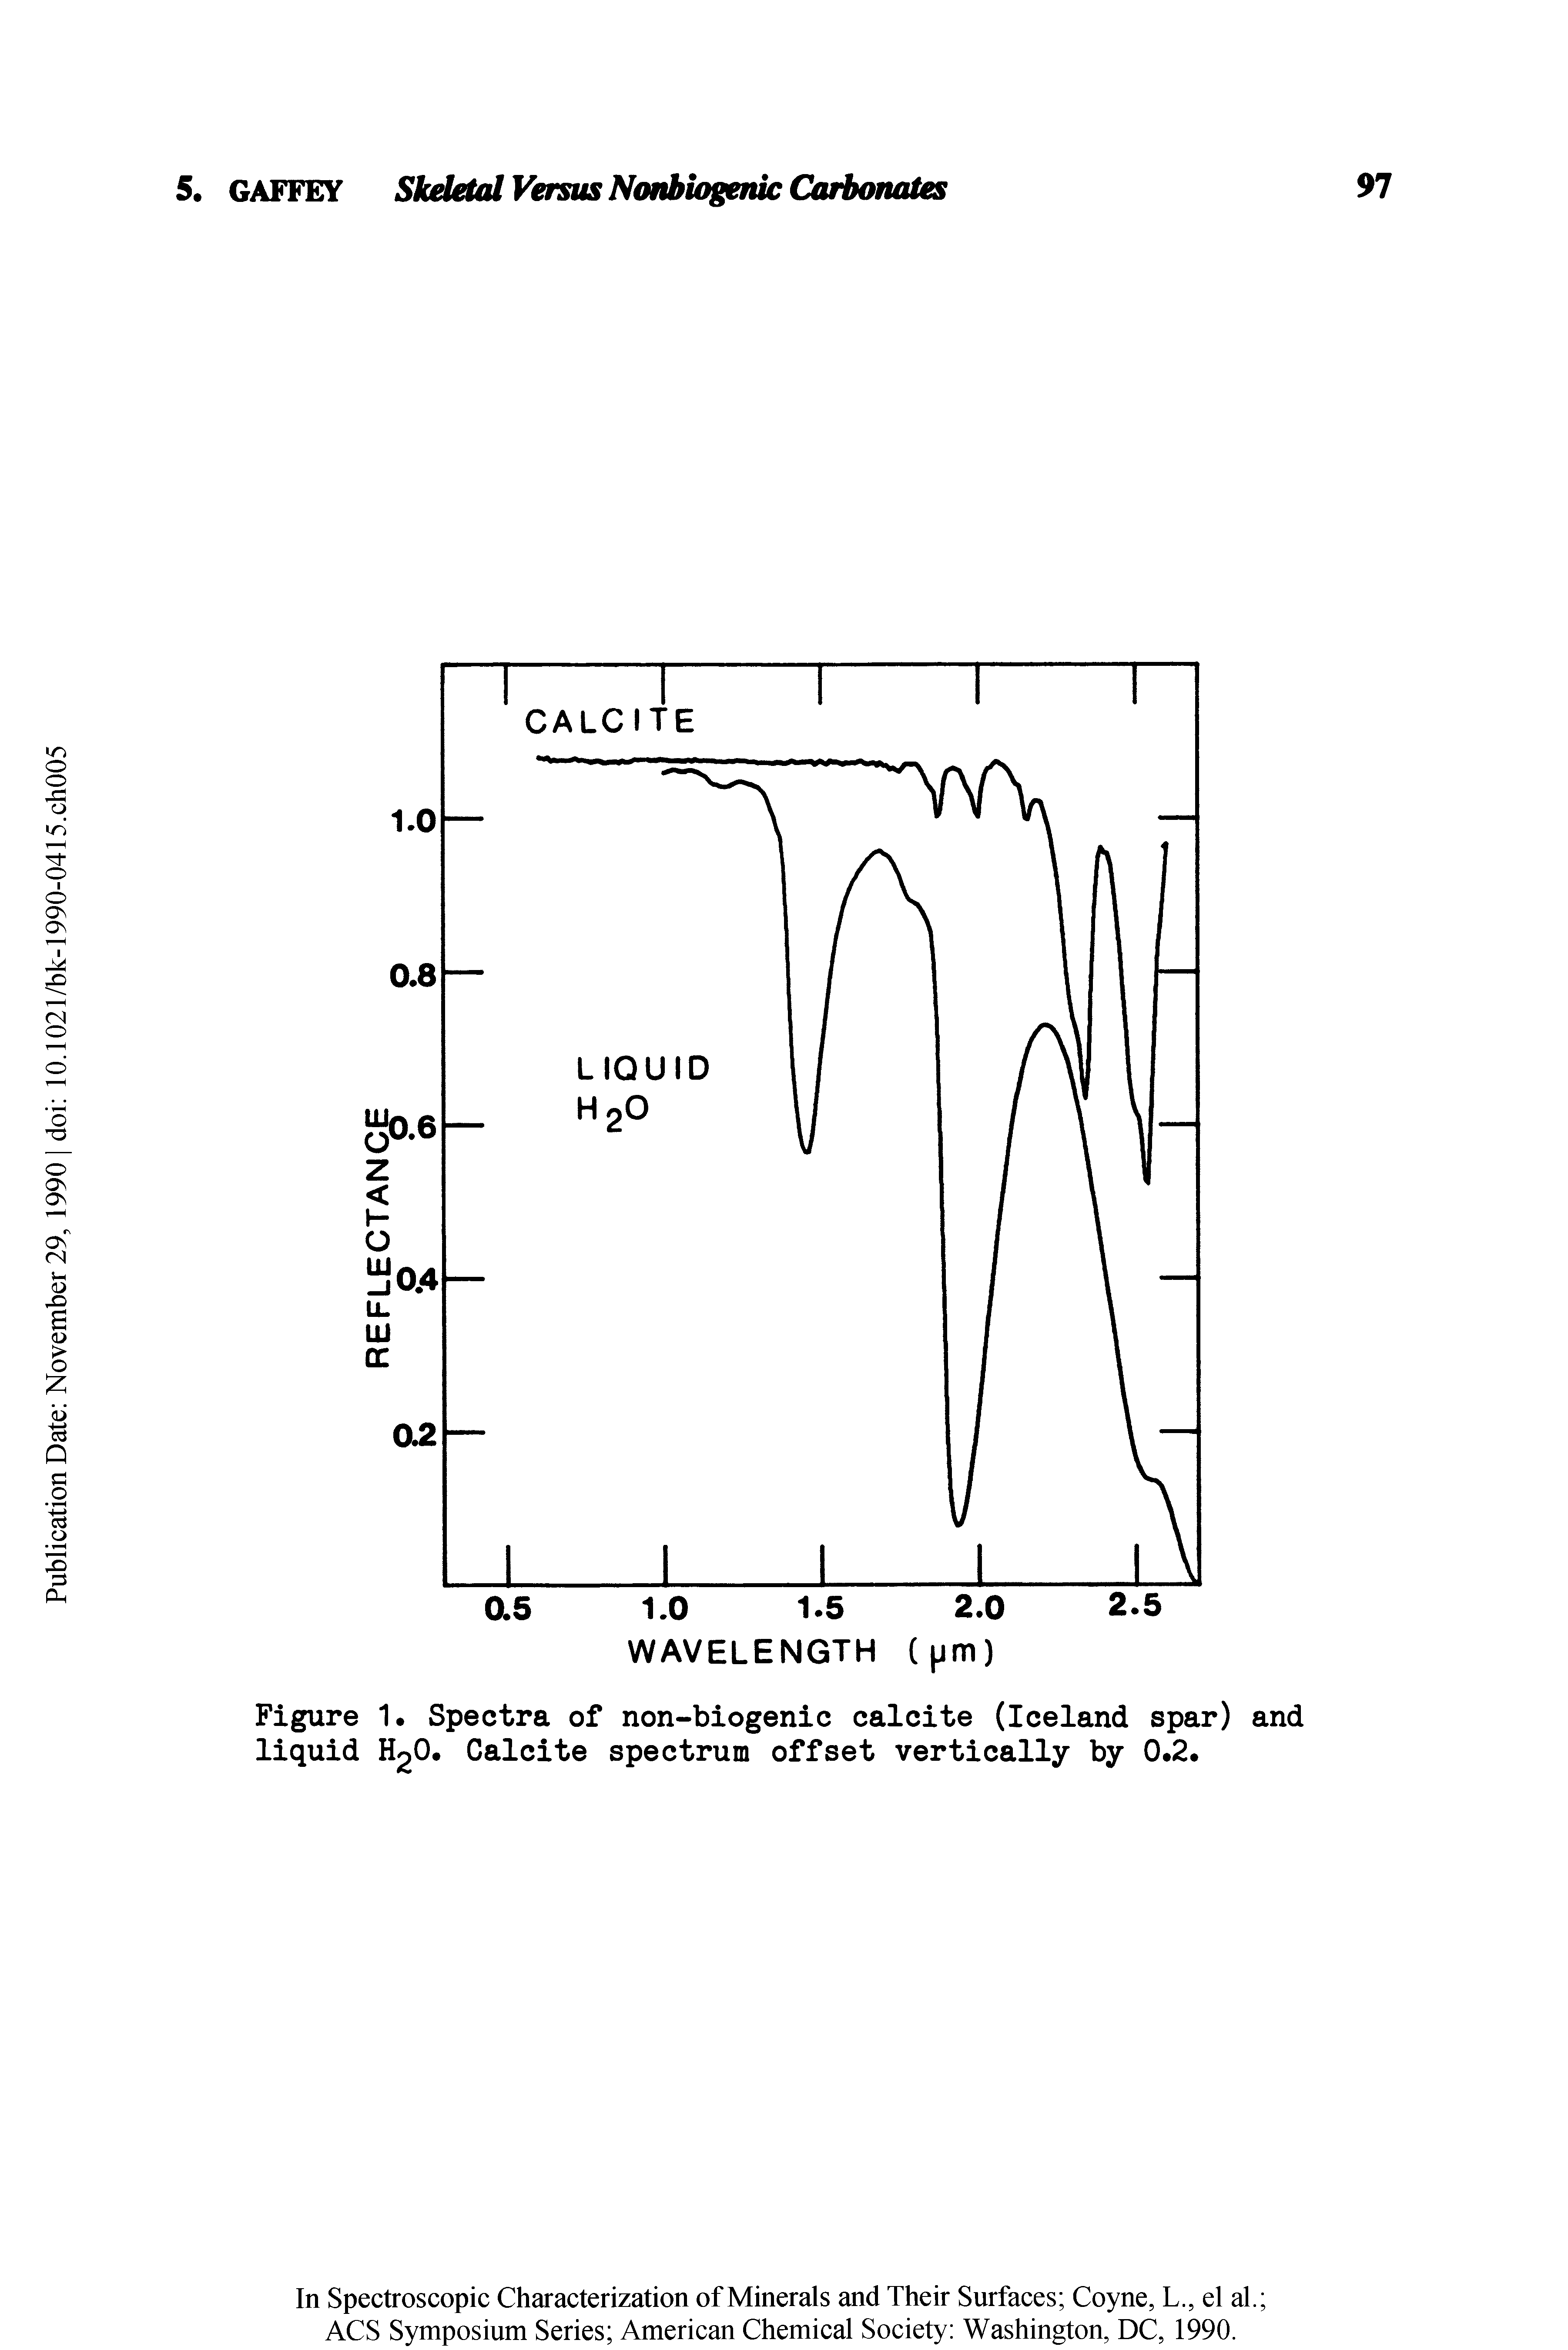 Figure 1. Spectra of non-biogenic calcite (Iceland spar) and liquid H2O. Calcite spectrum offset vertically by 0.2.